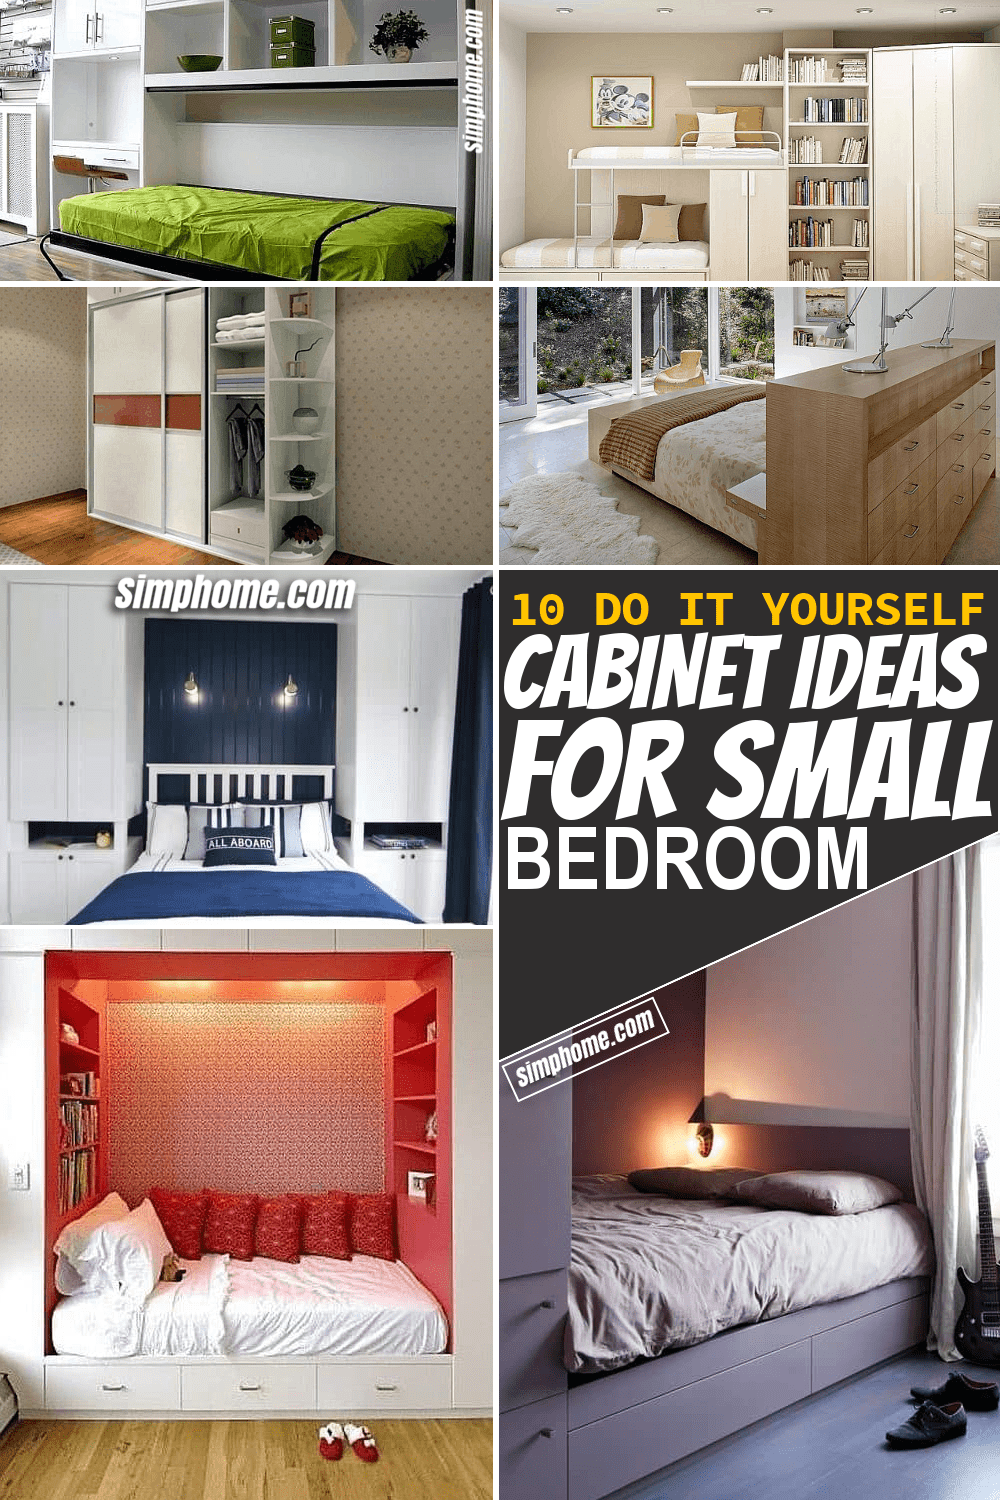 Simphome.com 10 DIY Cabinet Ideas for Small Bedroom Pinterest Long